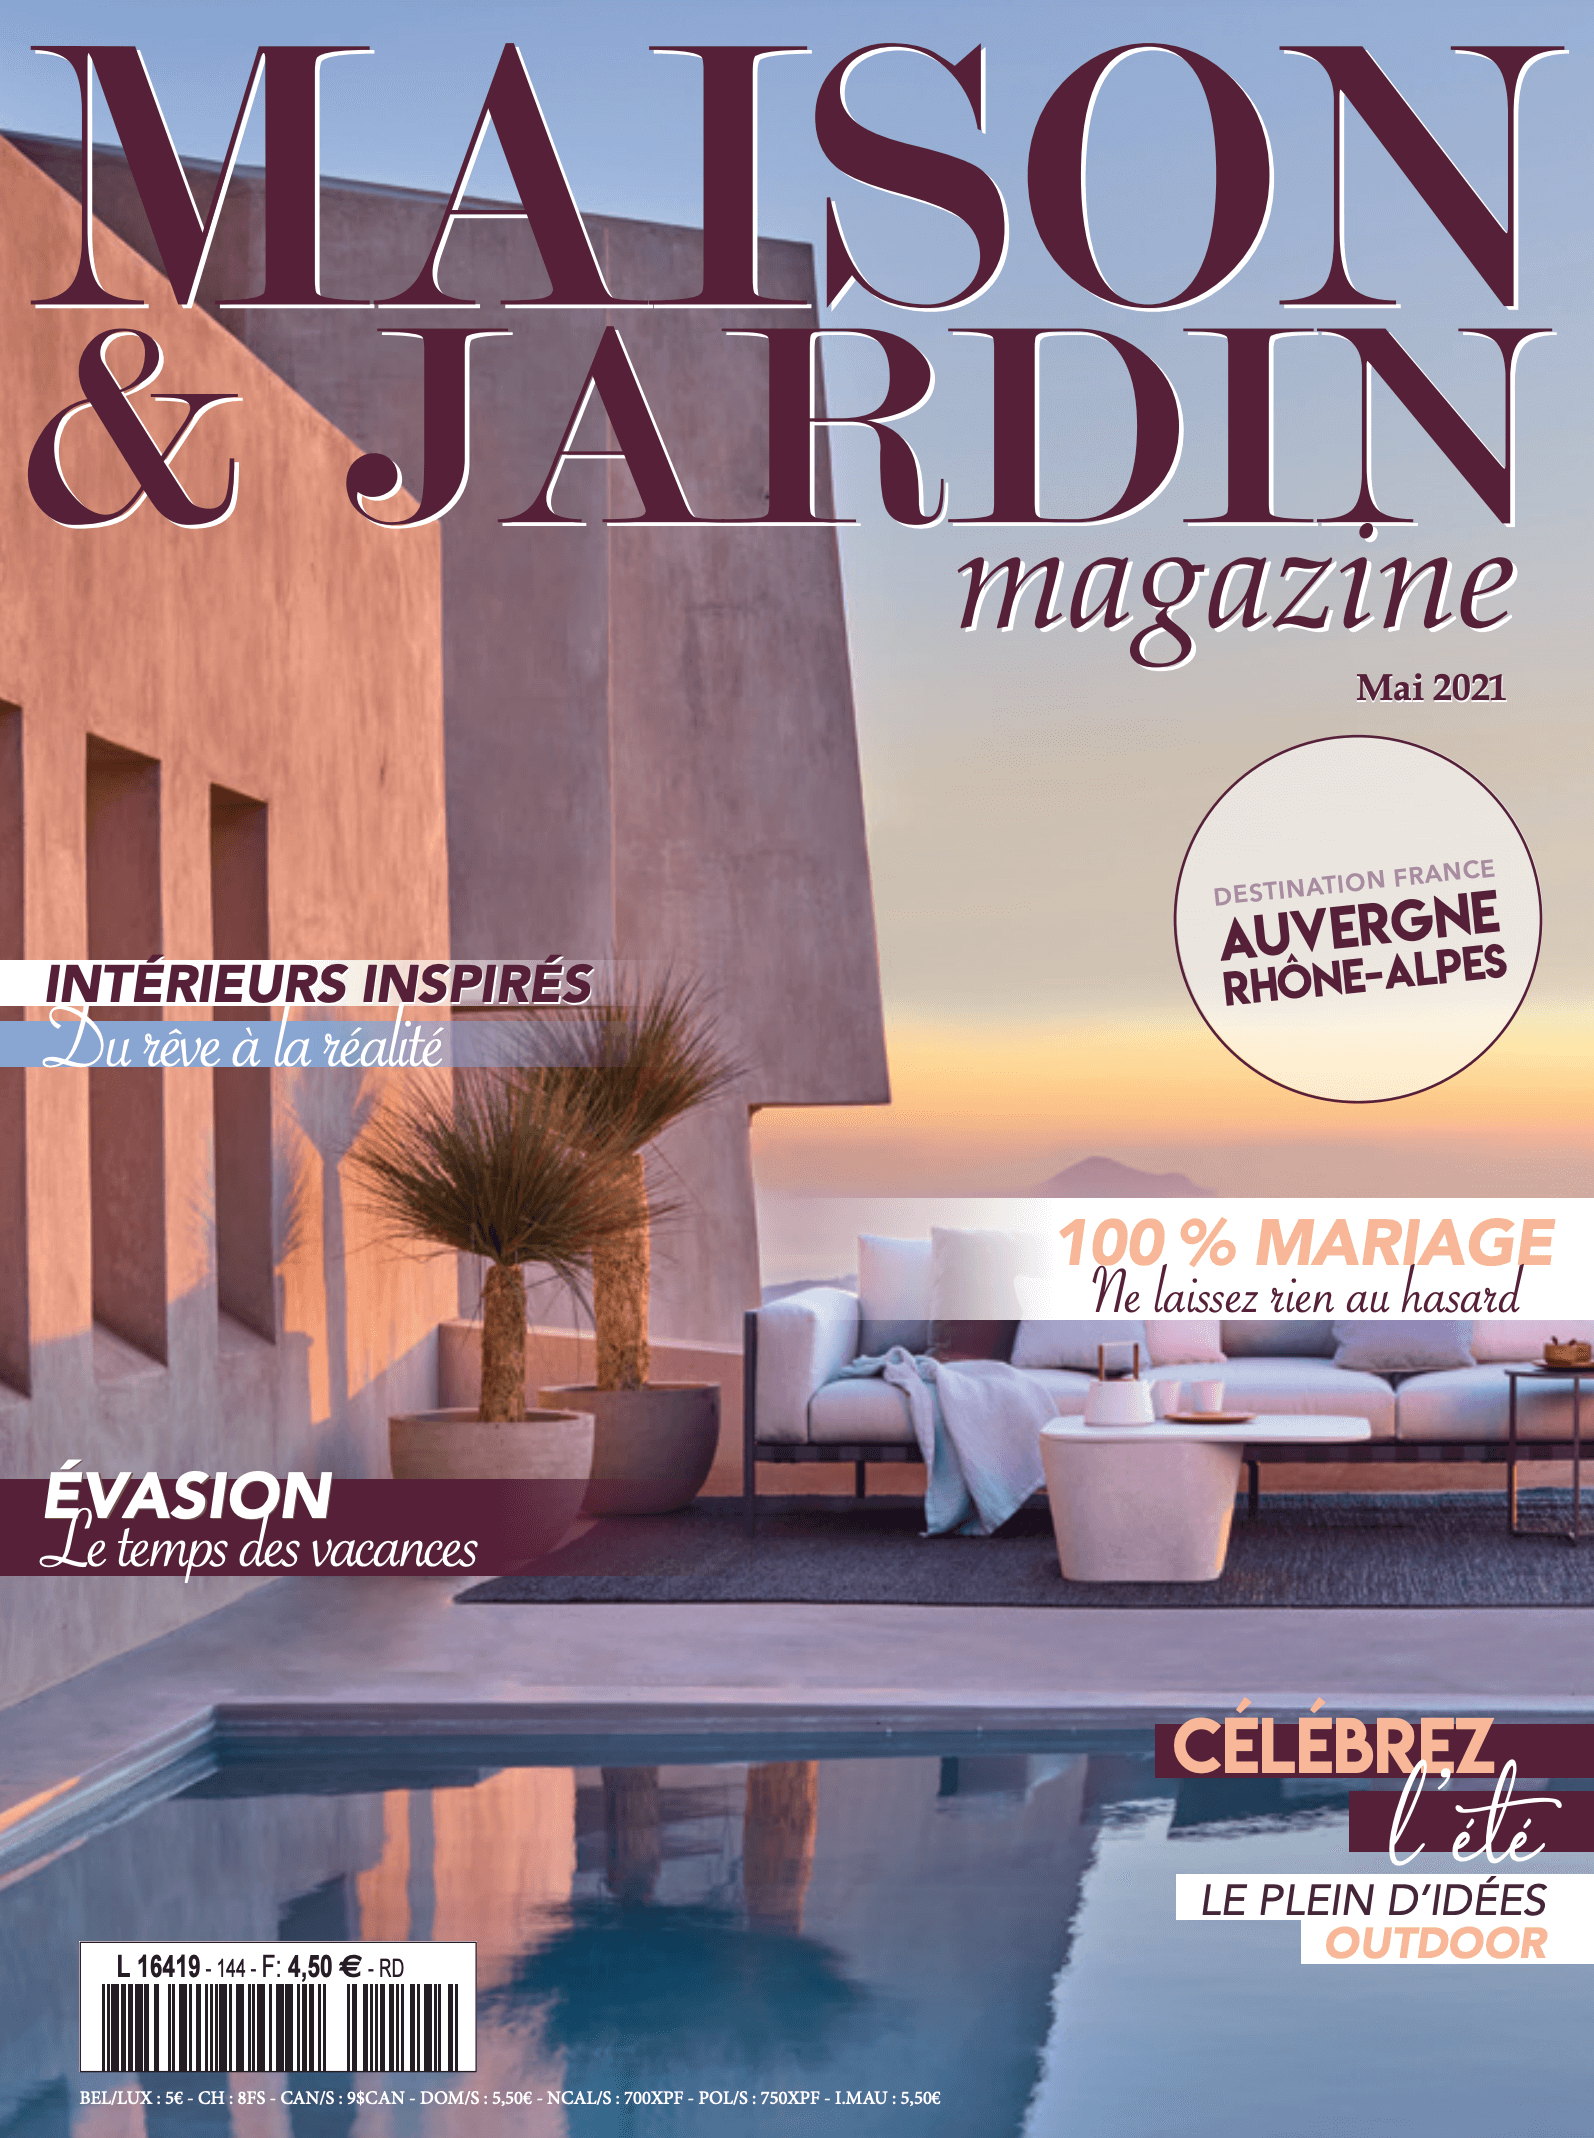 Altobuy sur Maison & Jardin magazine Mai 2021